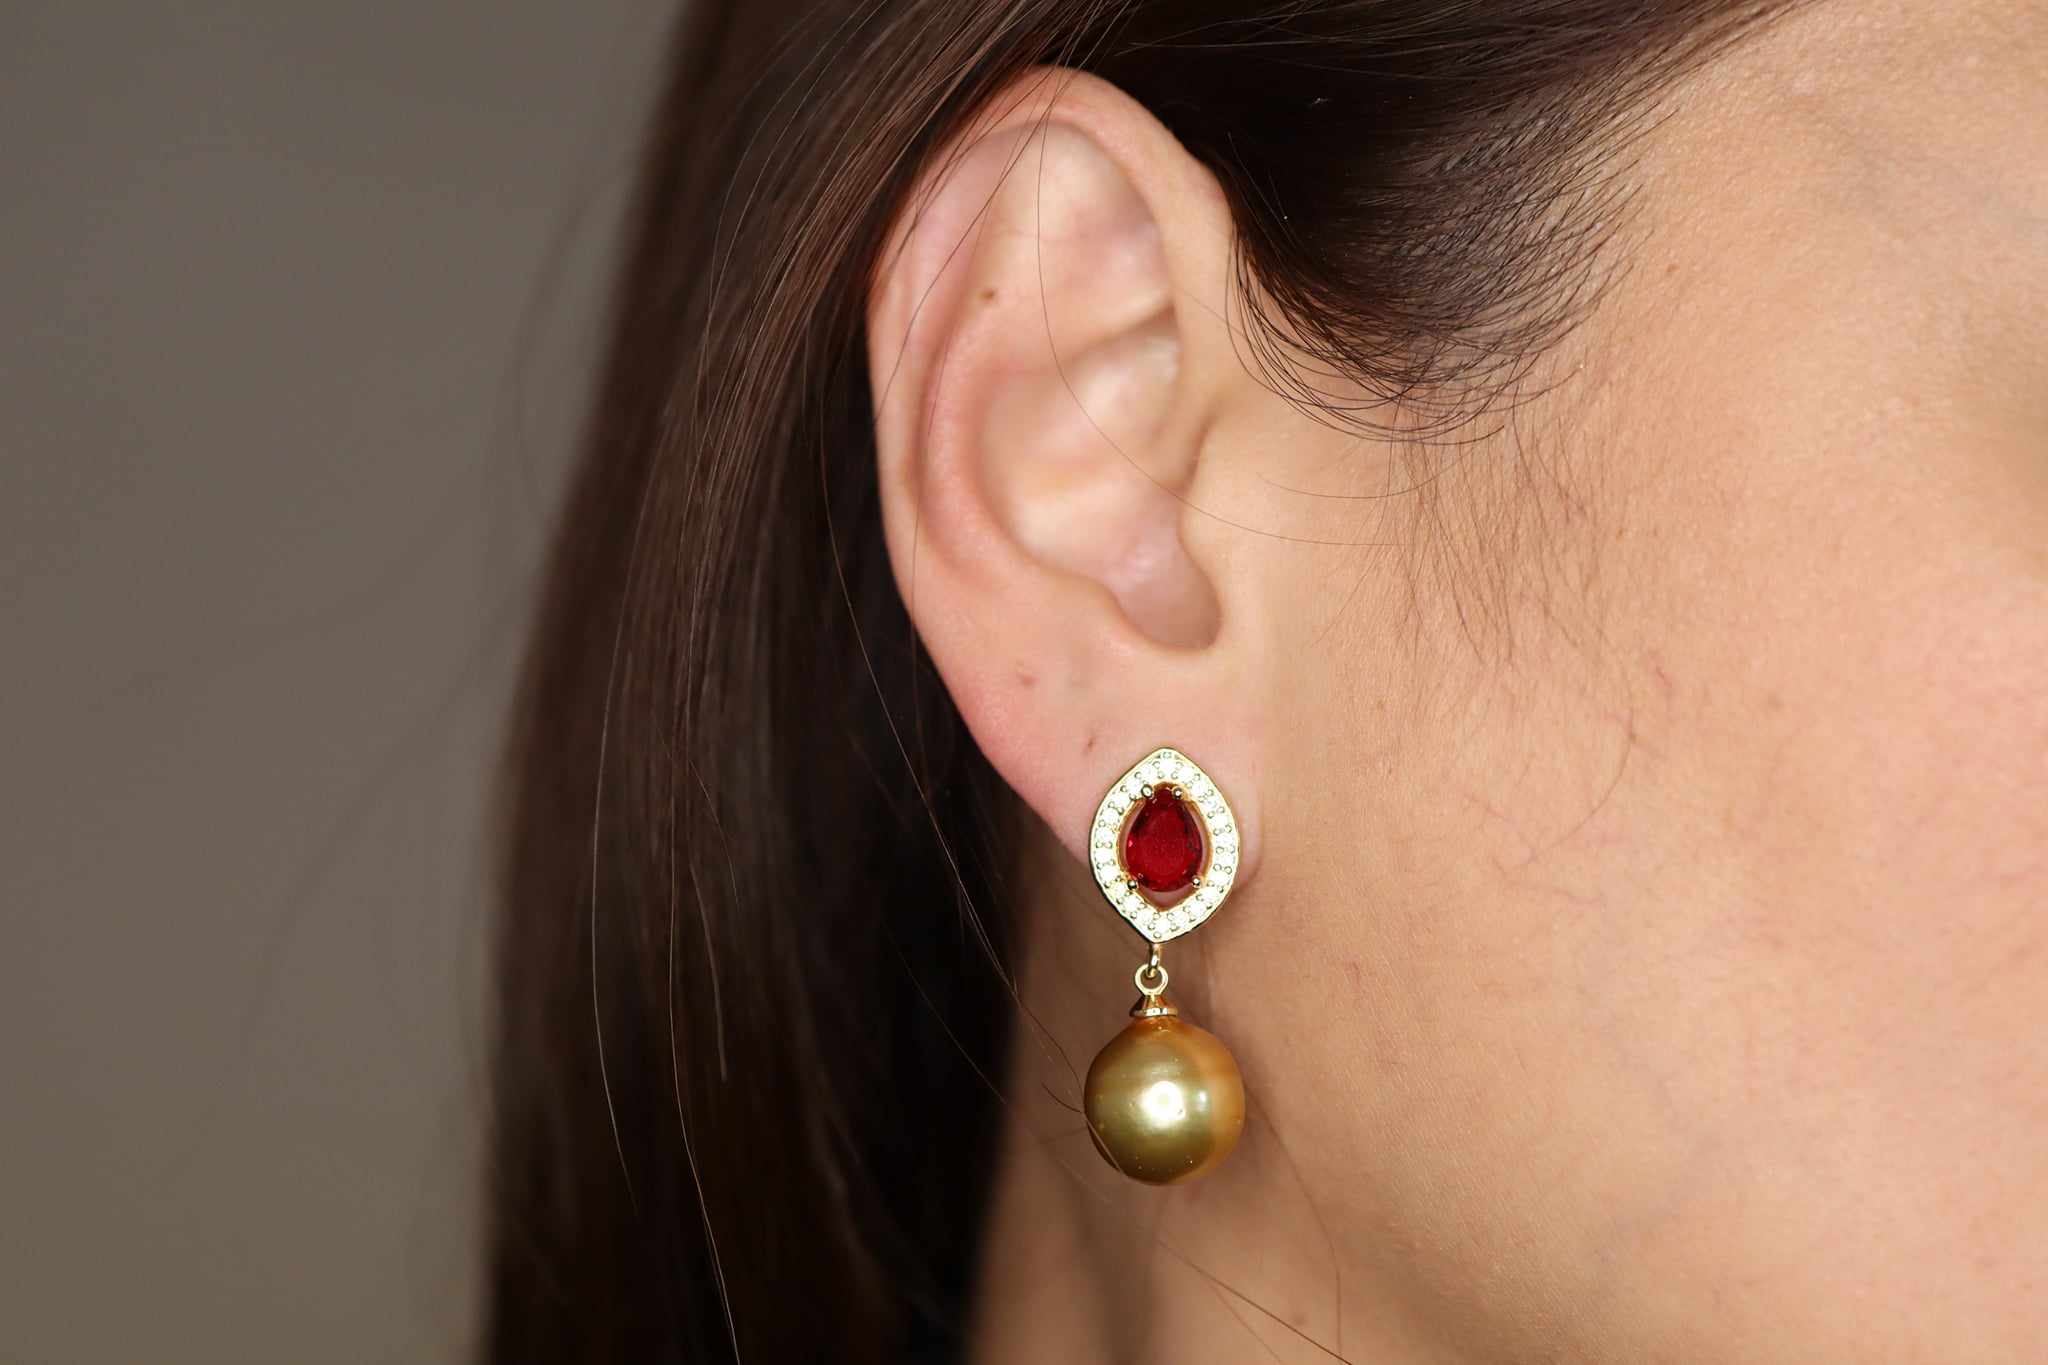 Tiffany South Sea Pearl Earrings